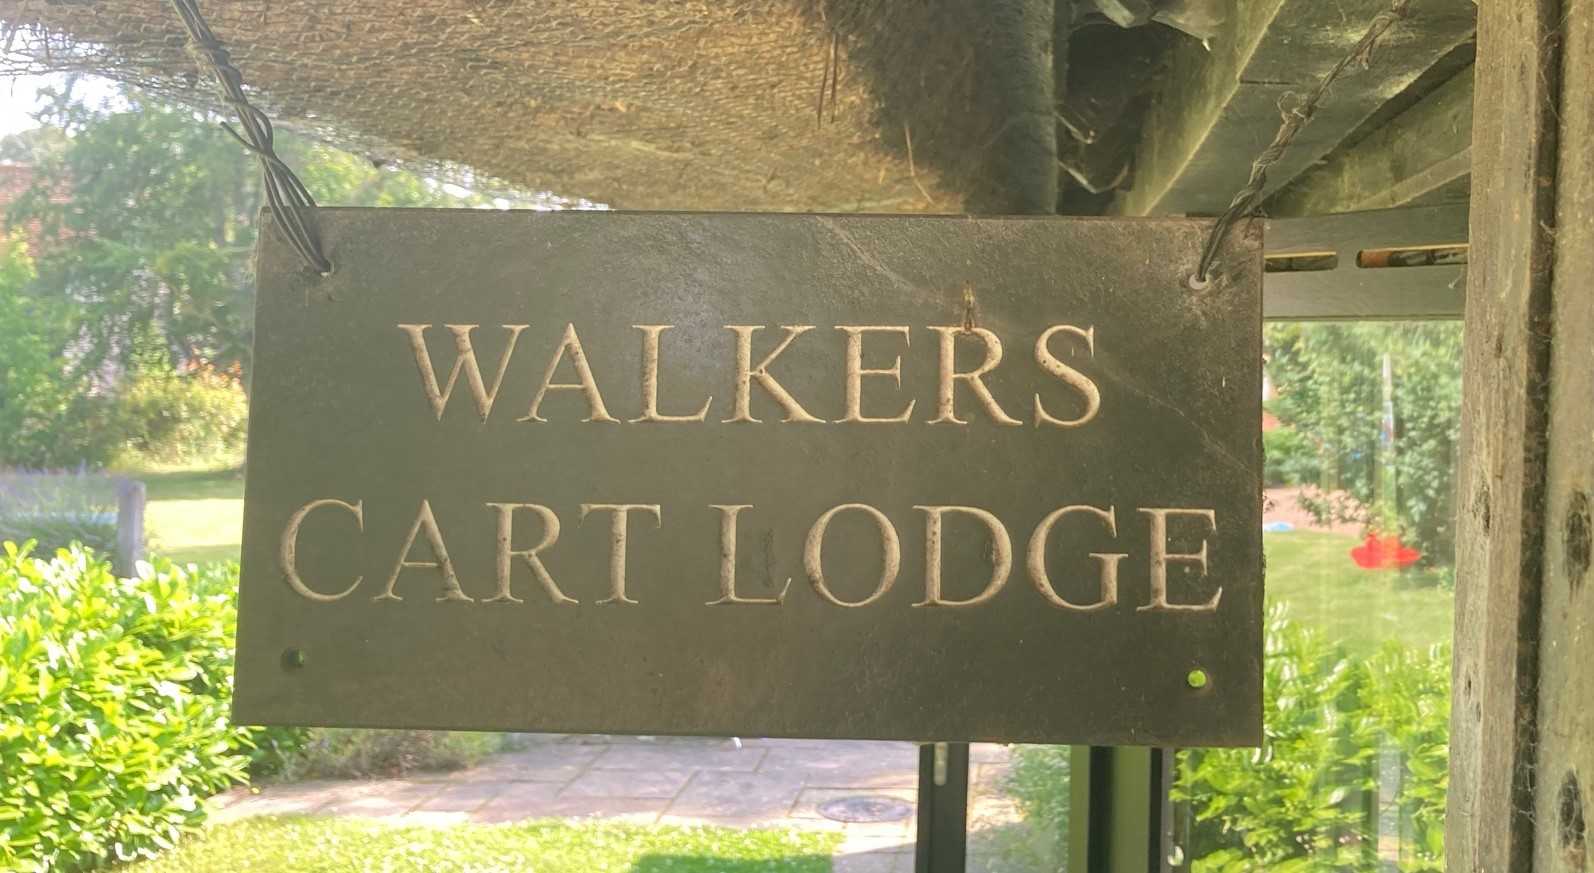 Walkers Cart Lodge